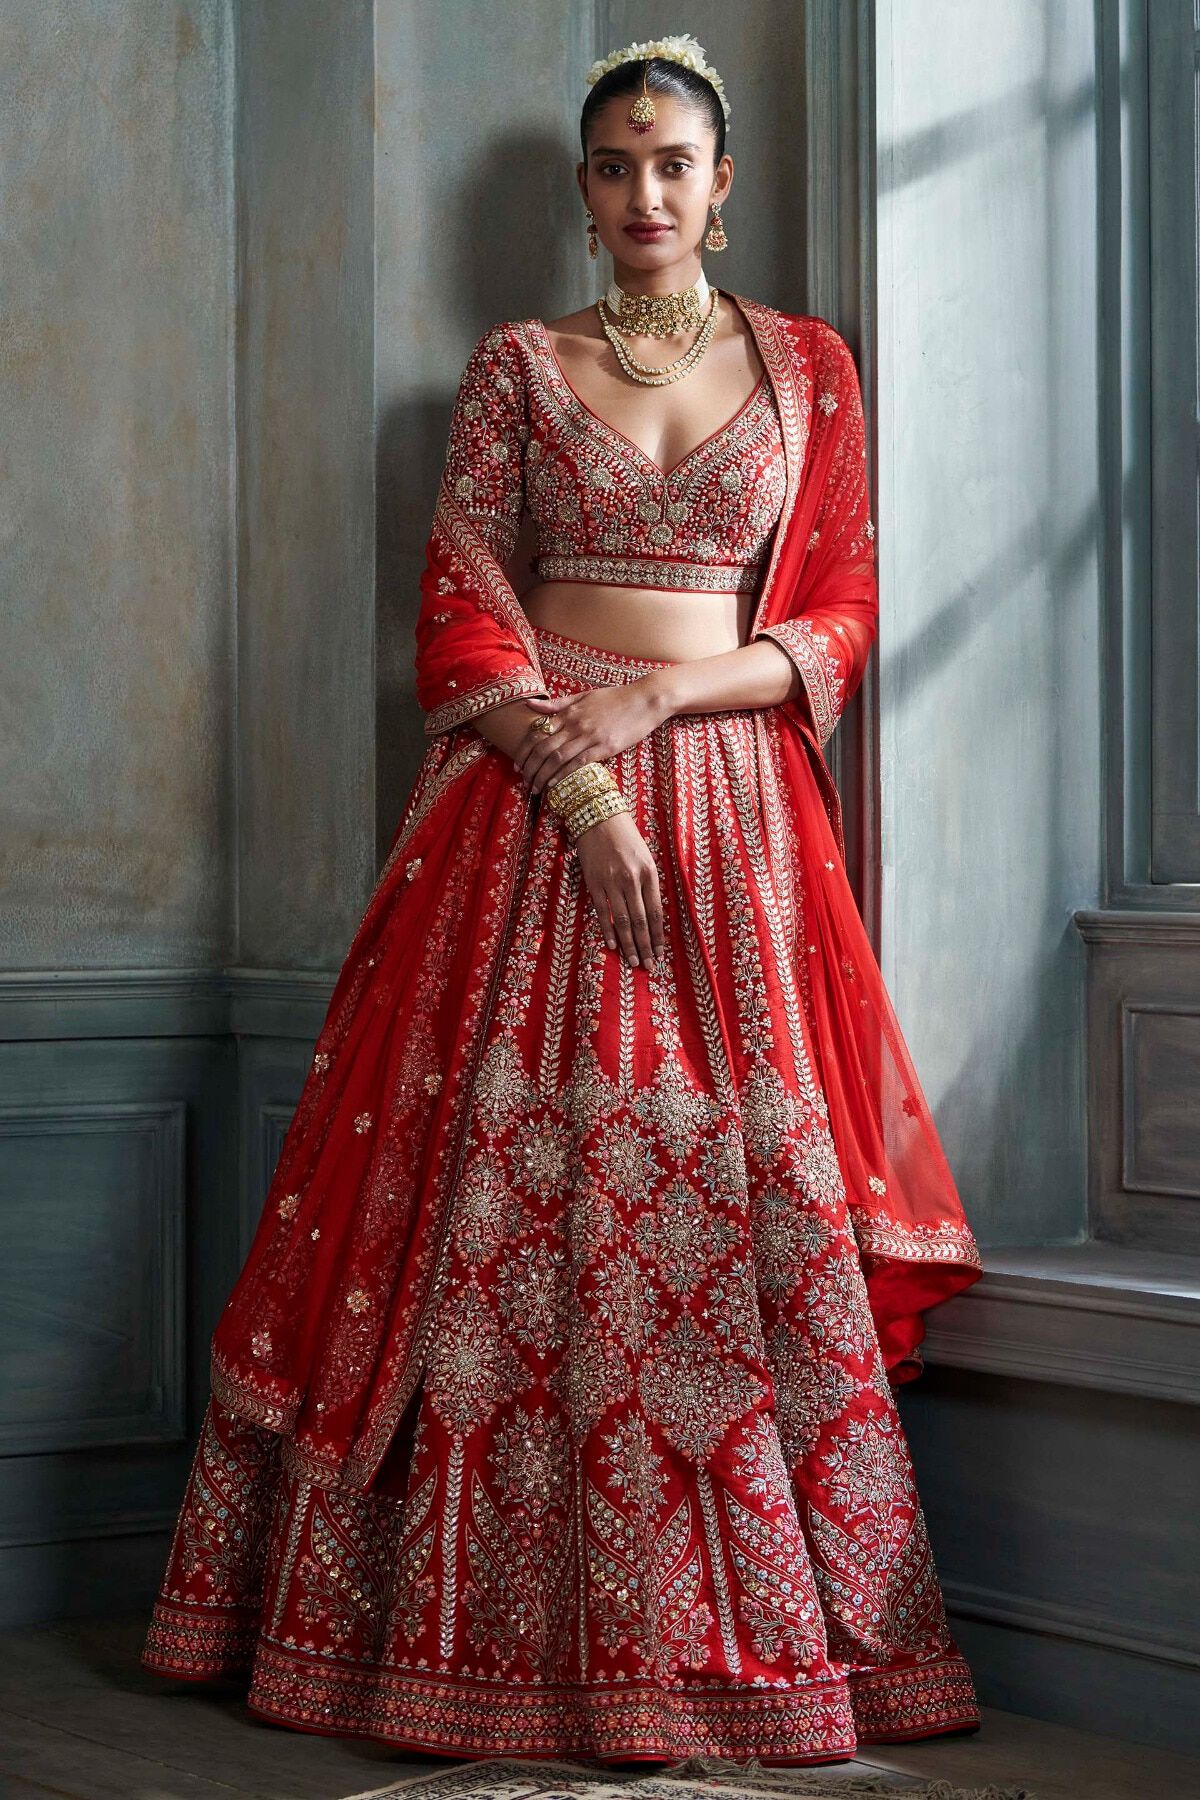 House of Anita Dongre celebrates Indian heritage with bridal wear -  Washington Square News